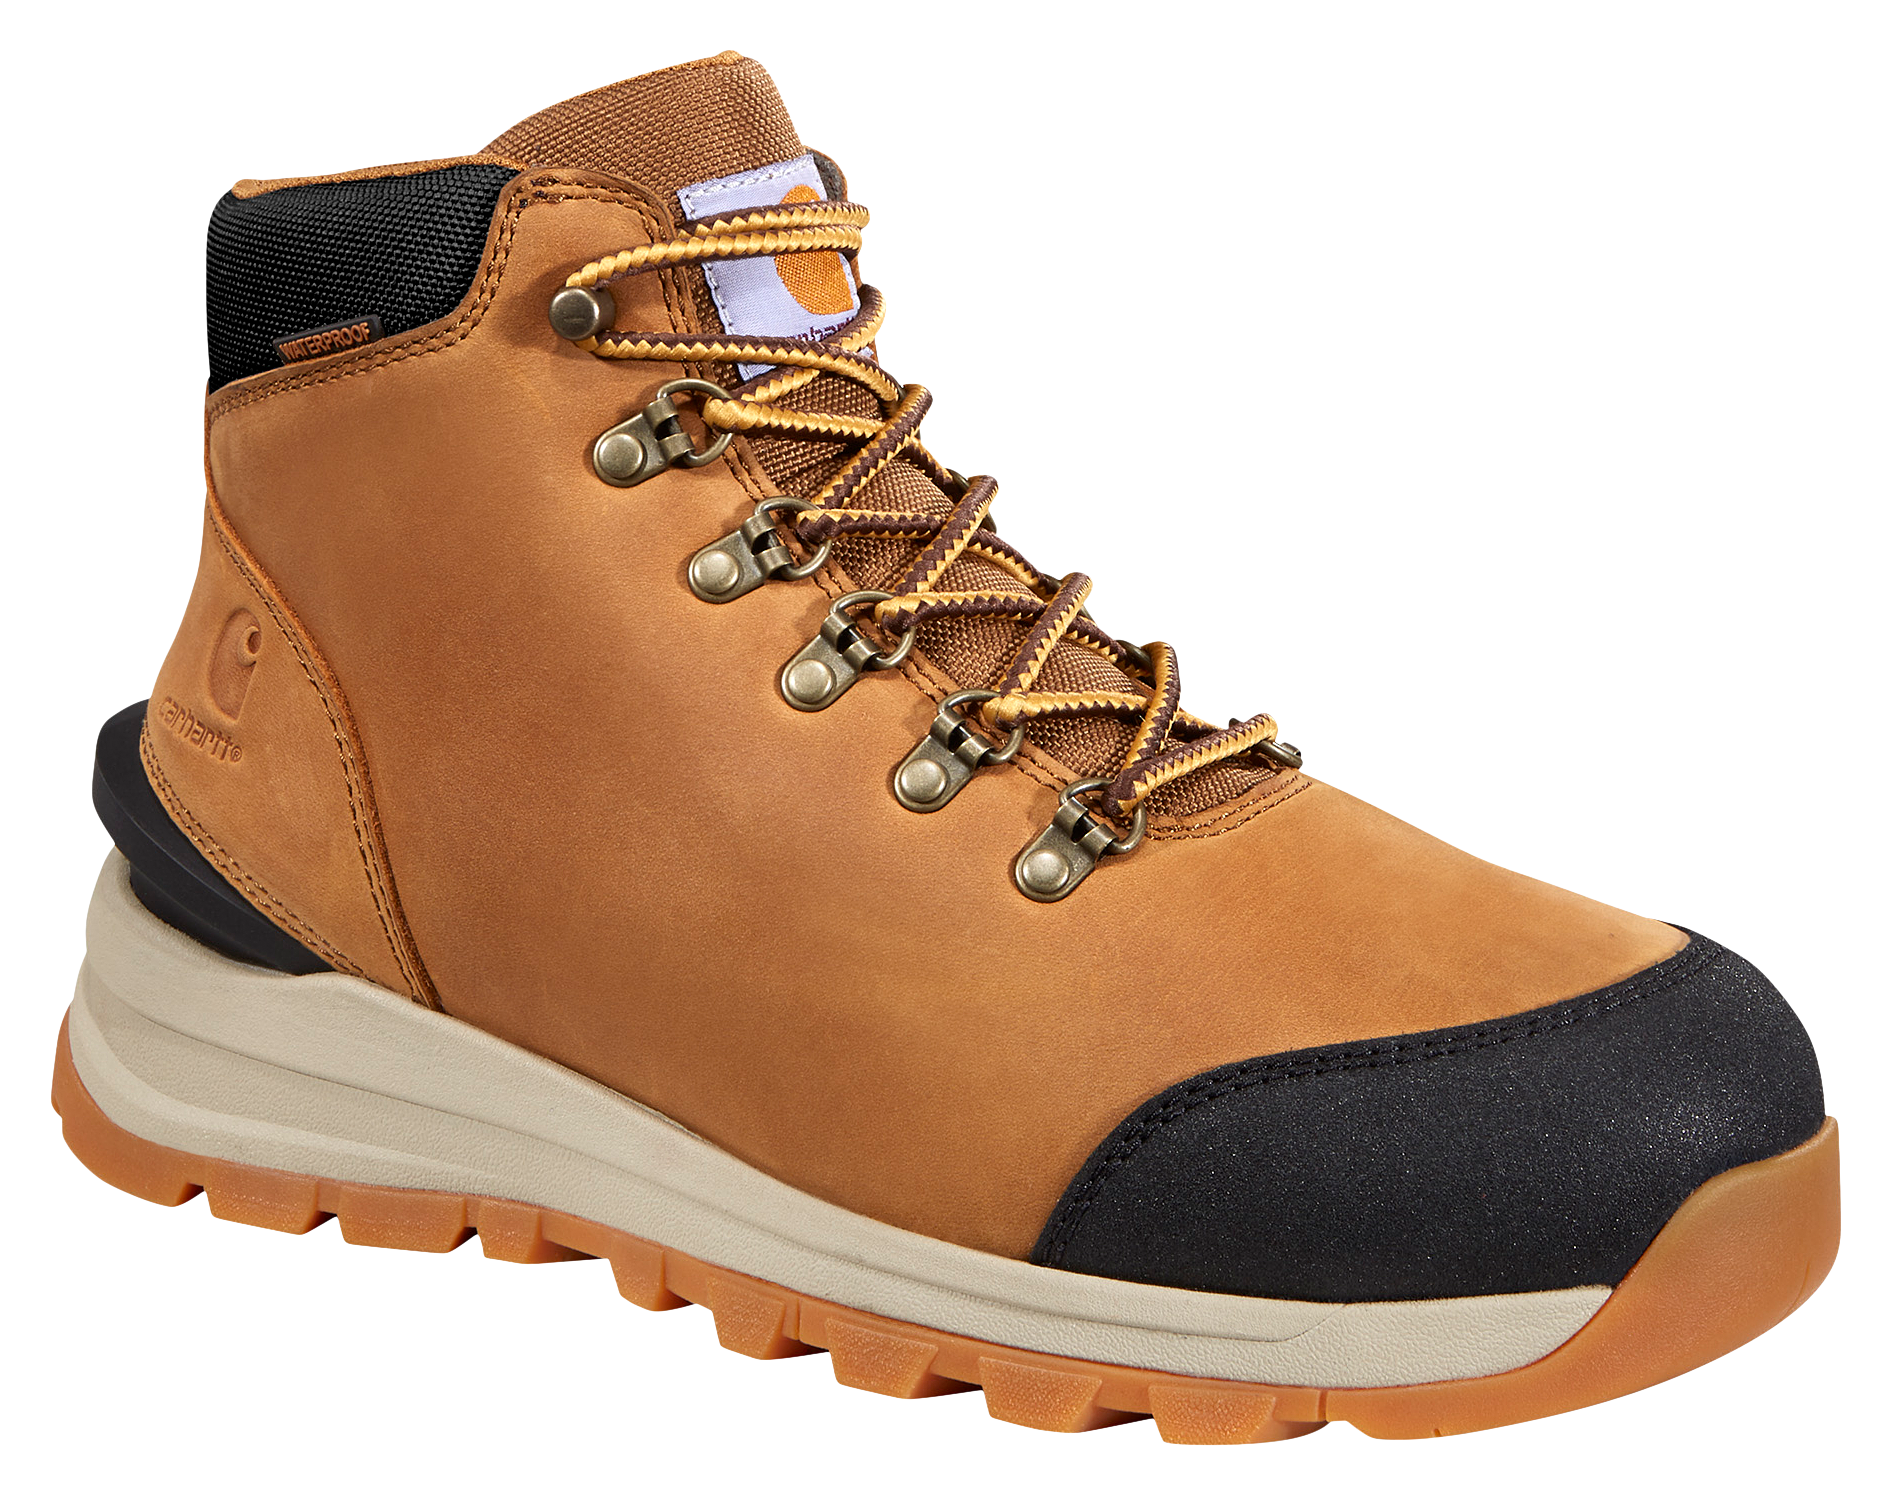 Carhartt Gilmore Waterproof Hiking Boots for Men - Brown - 9.5W